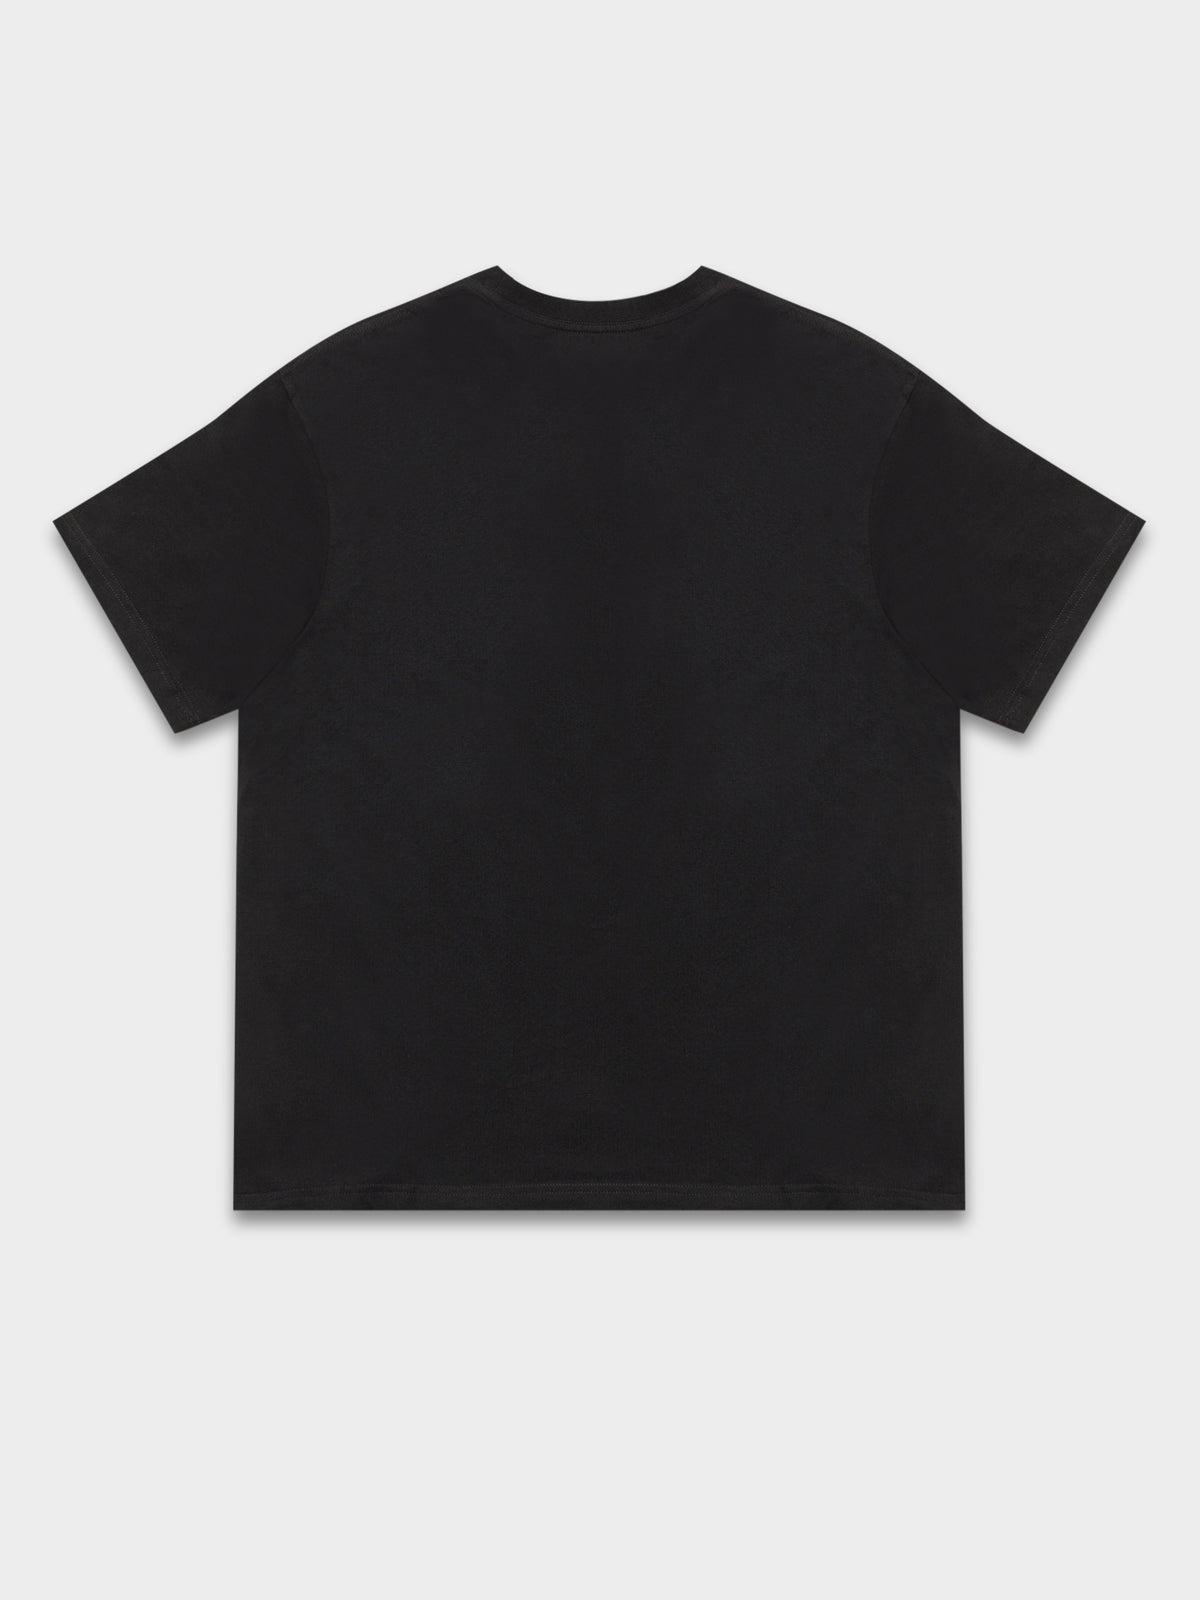 Chicago Bulls Dennis Rodman T-Shirt in Black